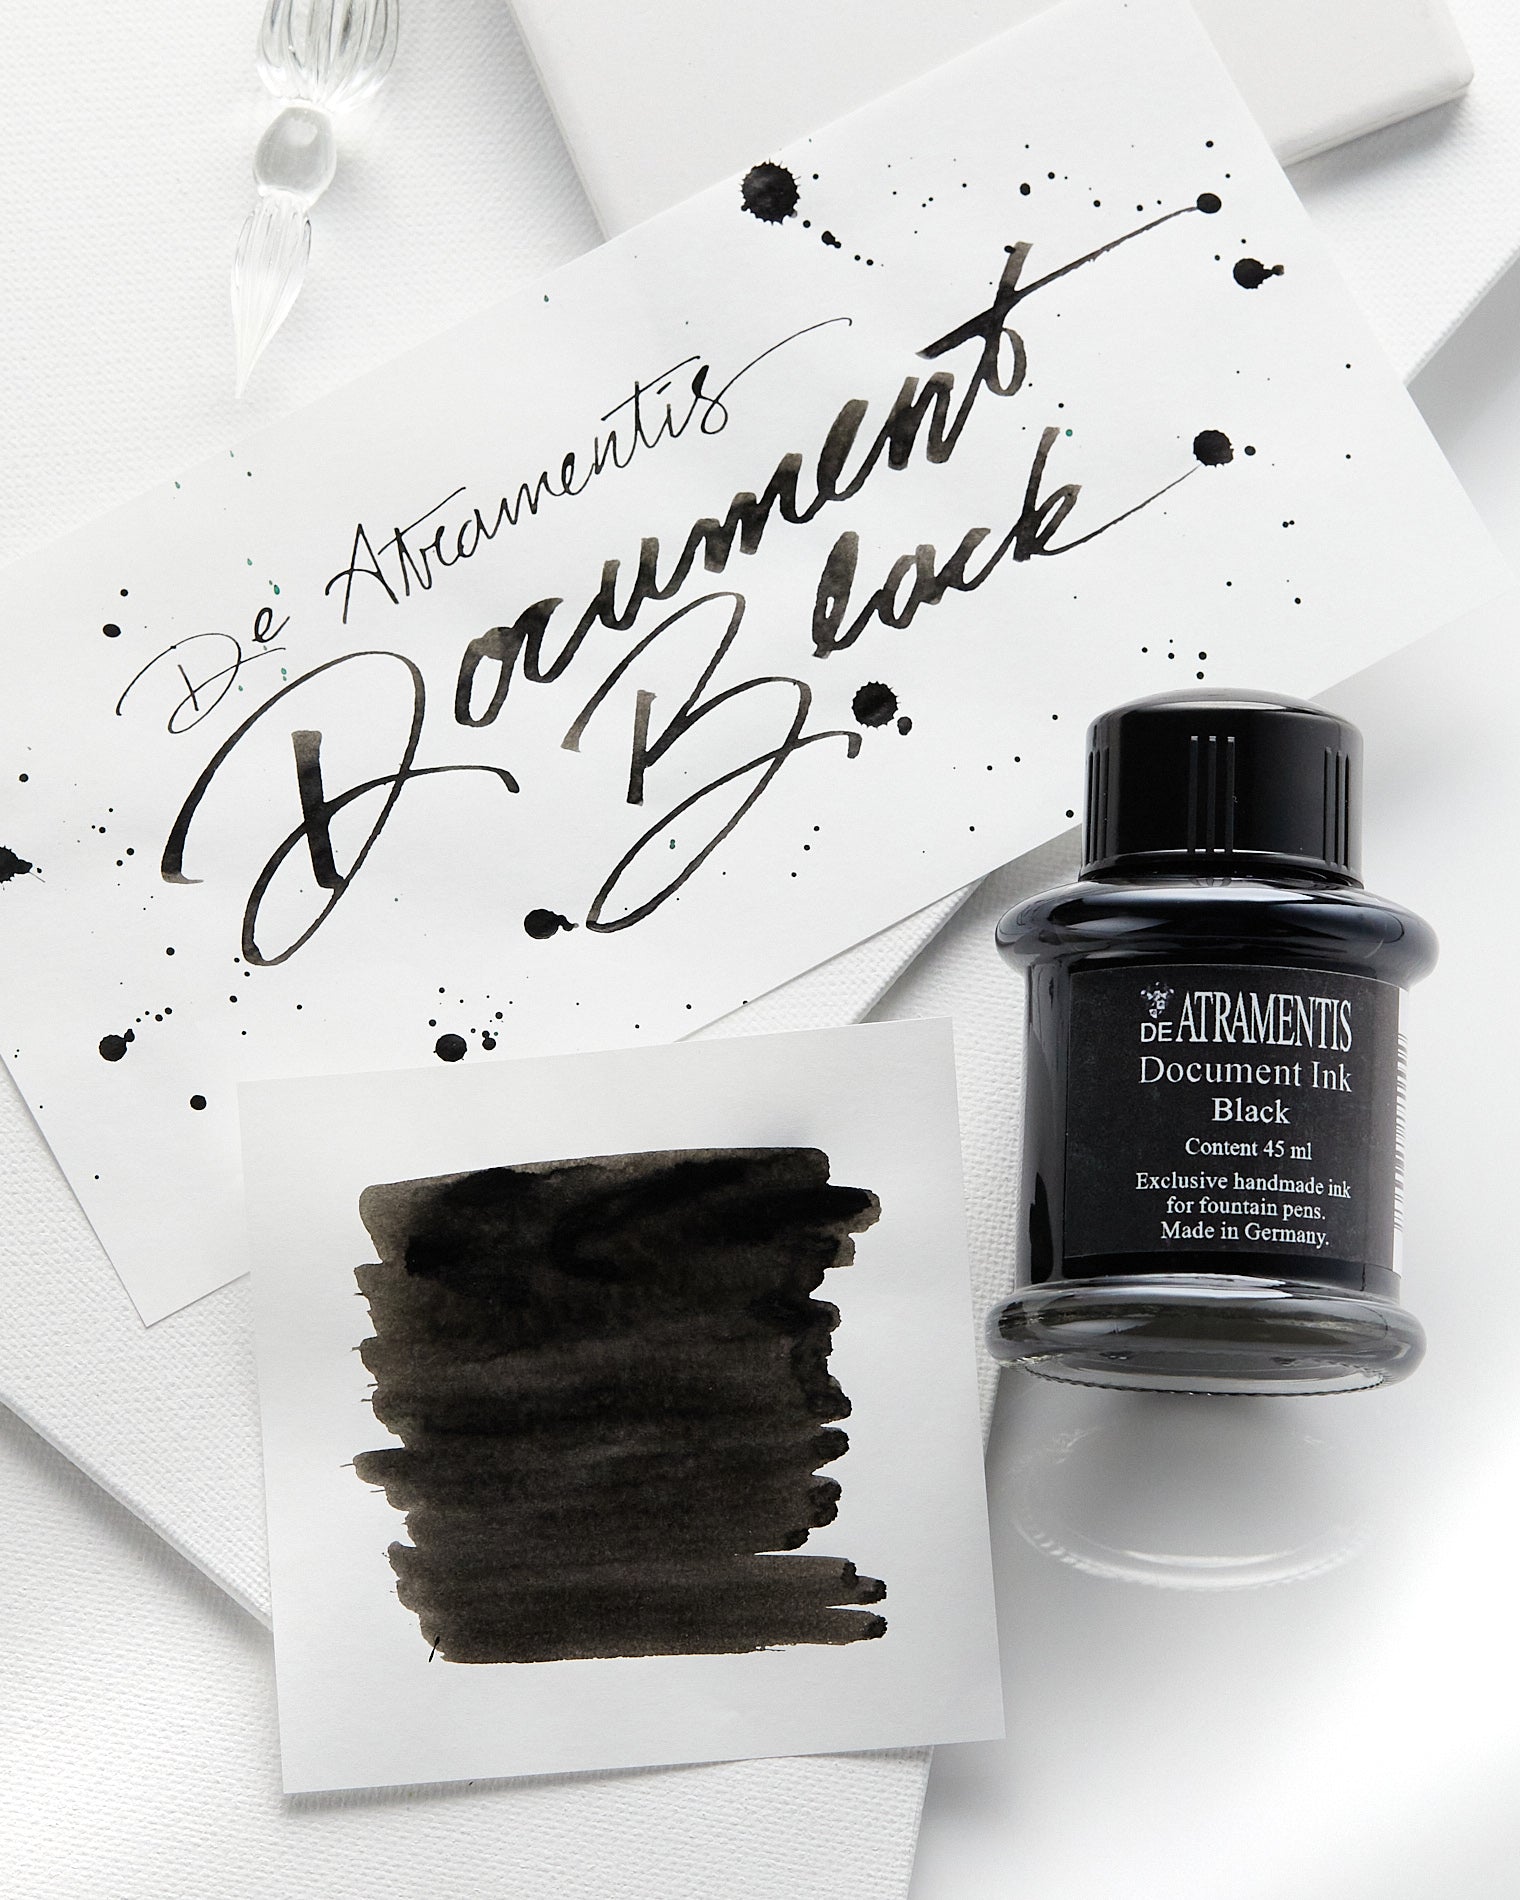 De Atramentis Document Black Ink bottle with writing sample